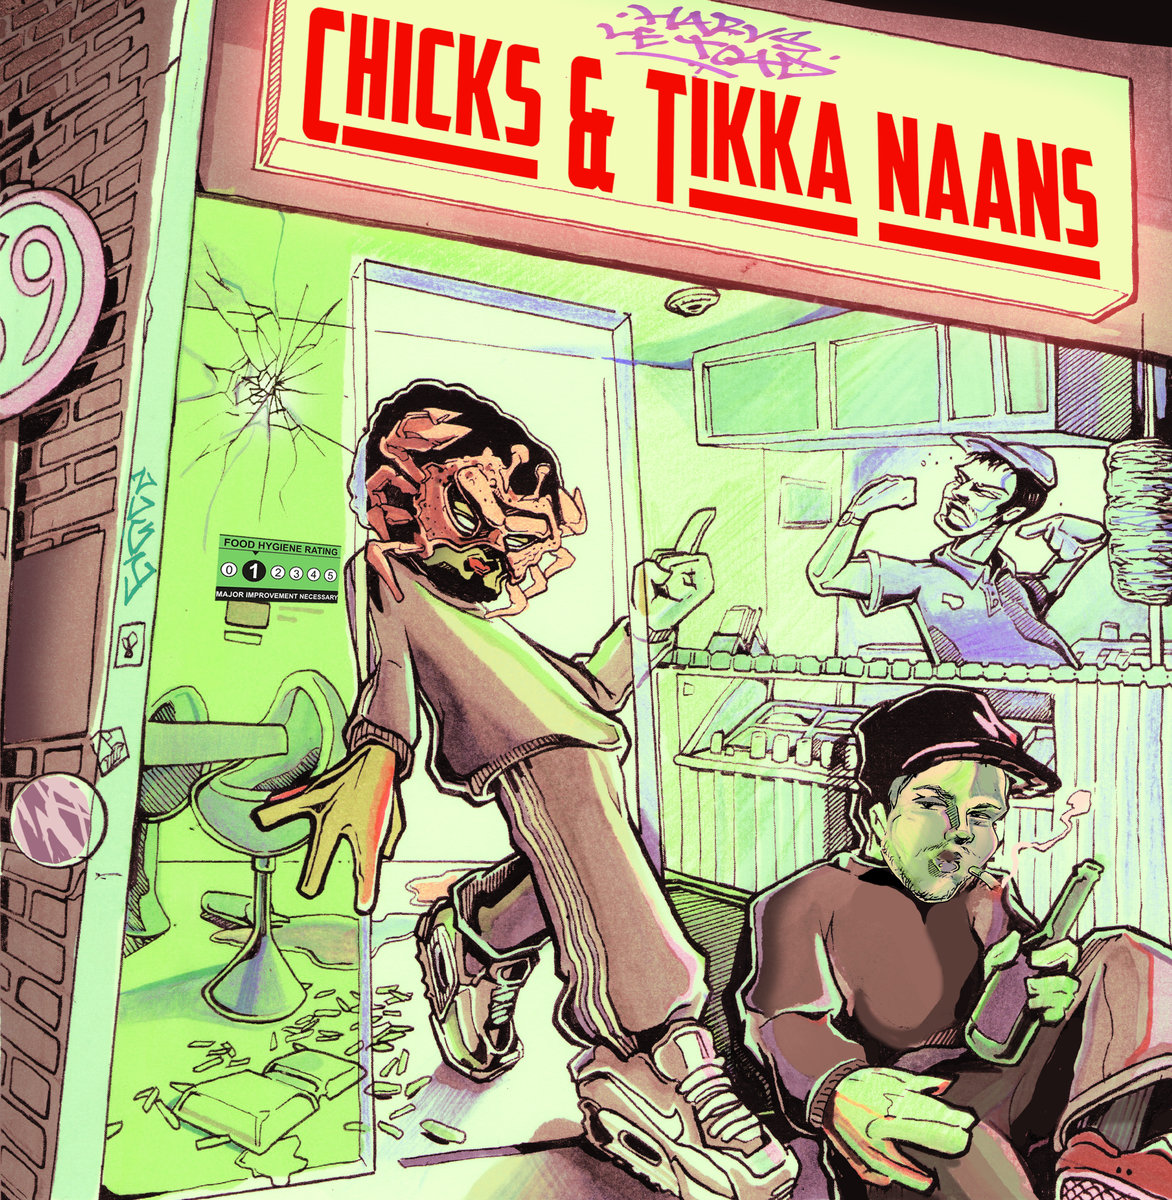 Chicks & Tikka Naans